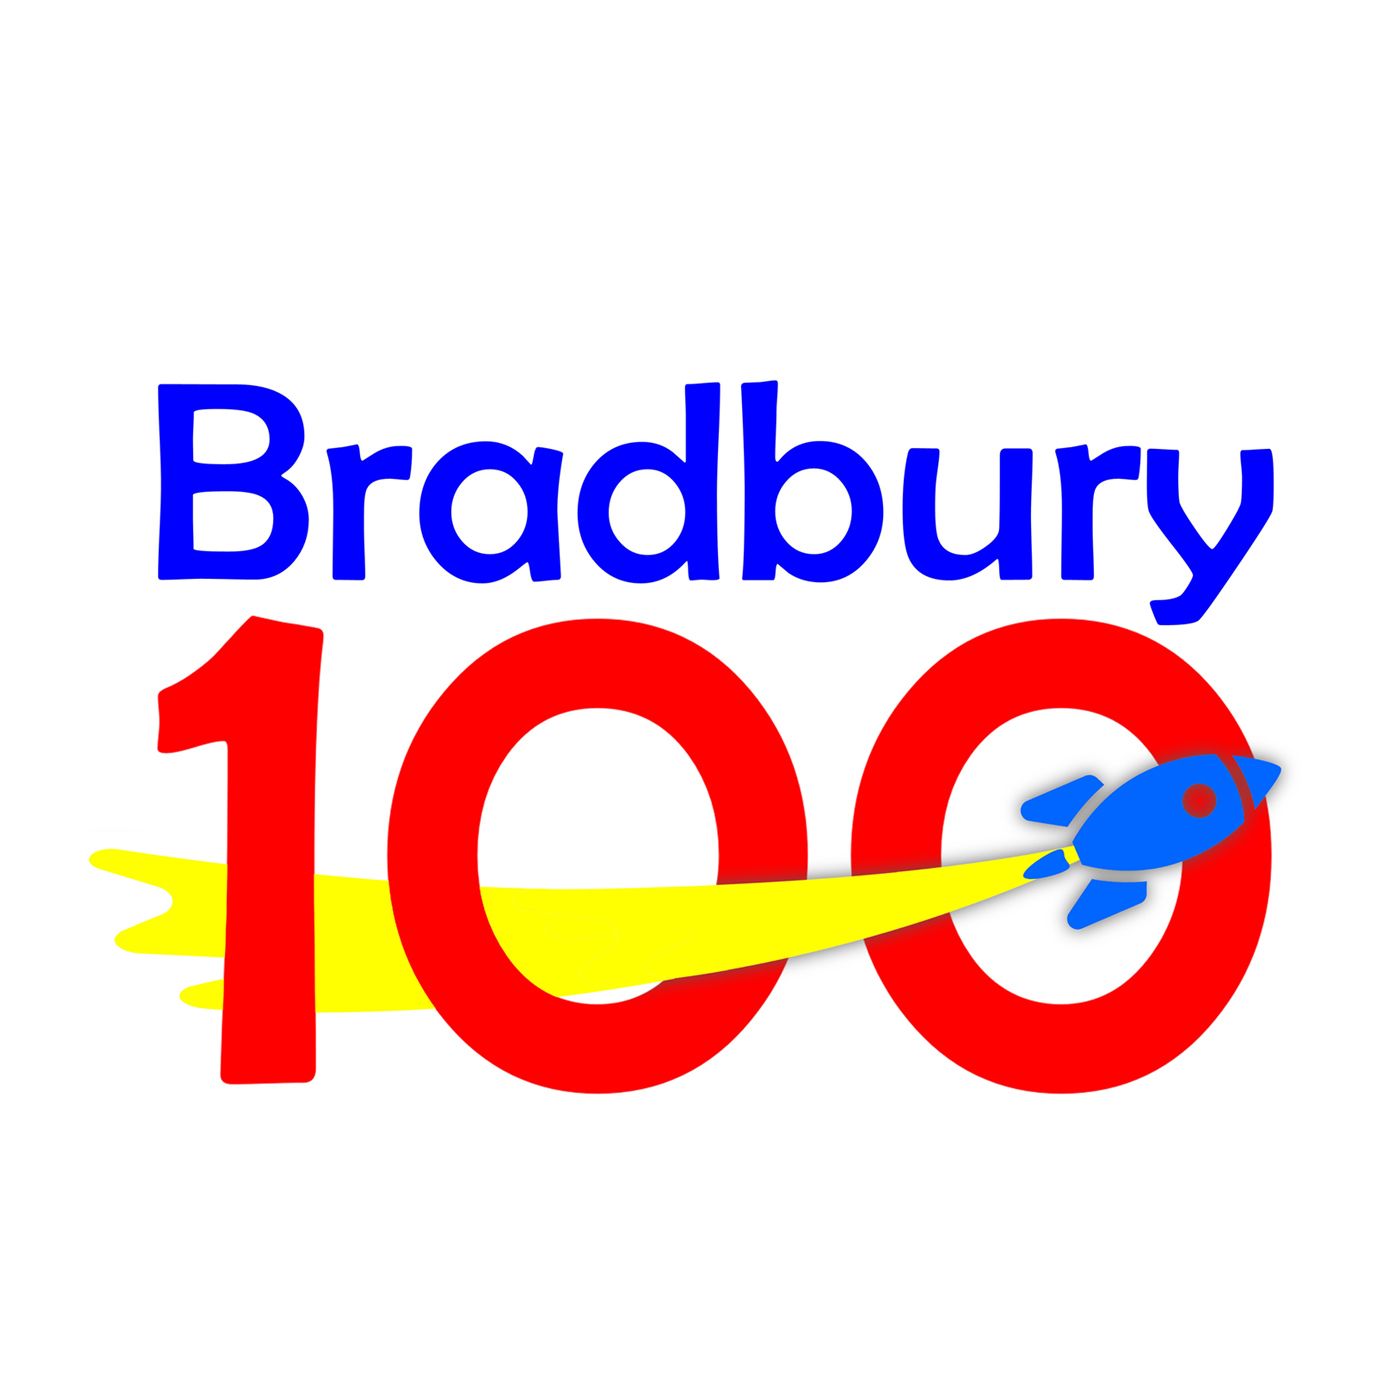 Bradbury 100 - Celebrating the Life and Work of American Writer Ray Bradbury